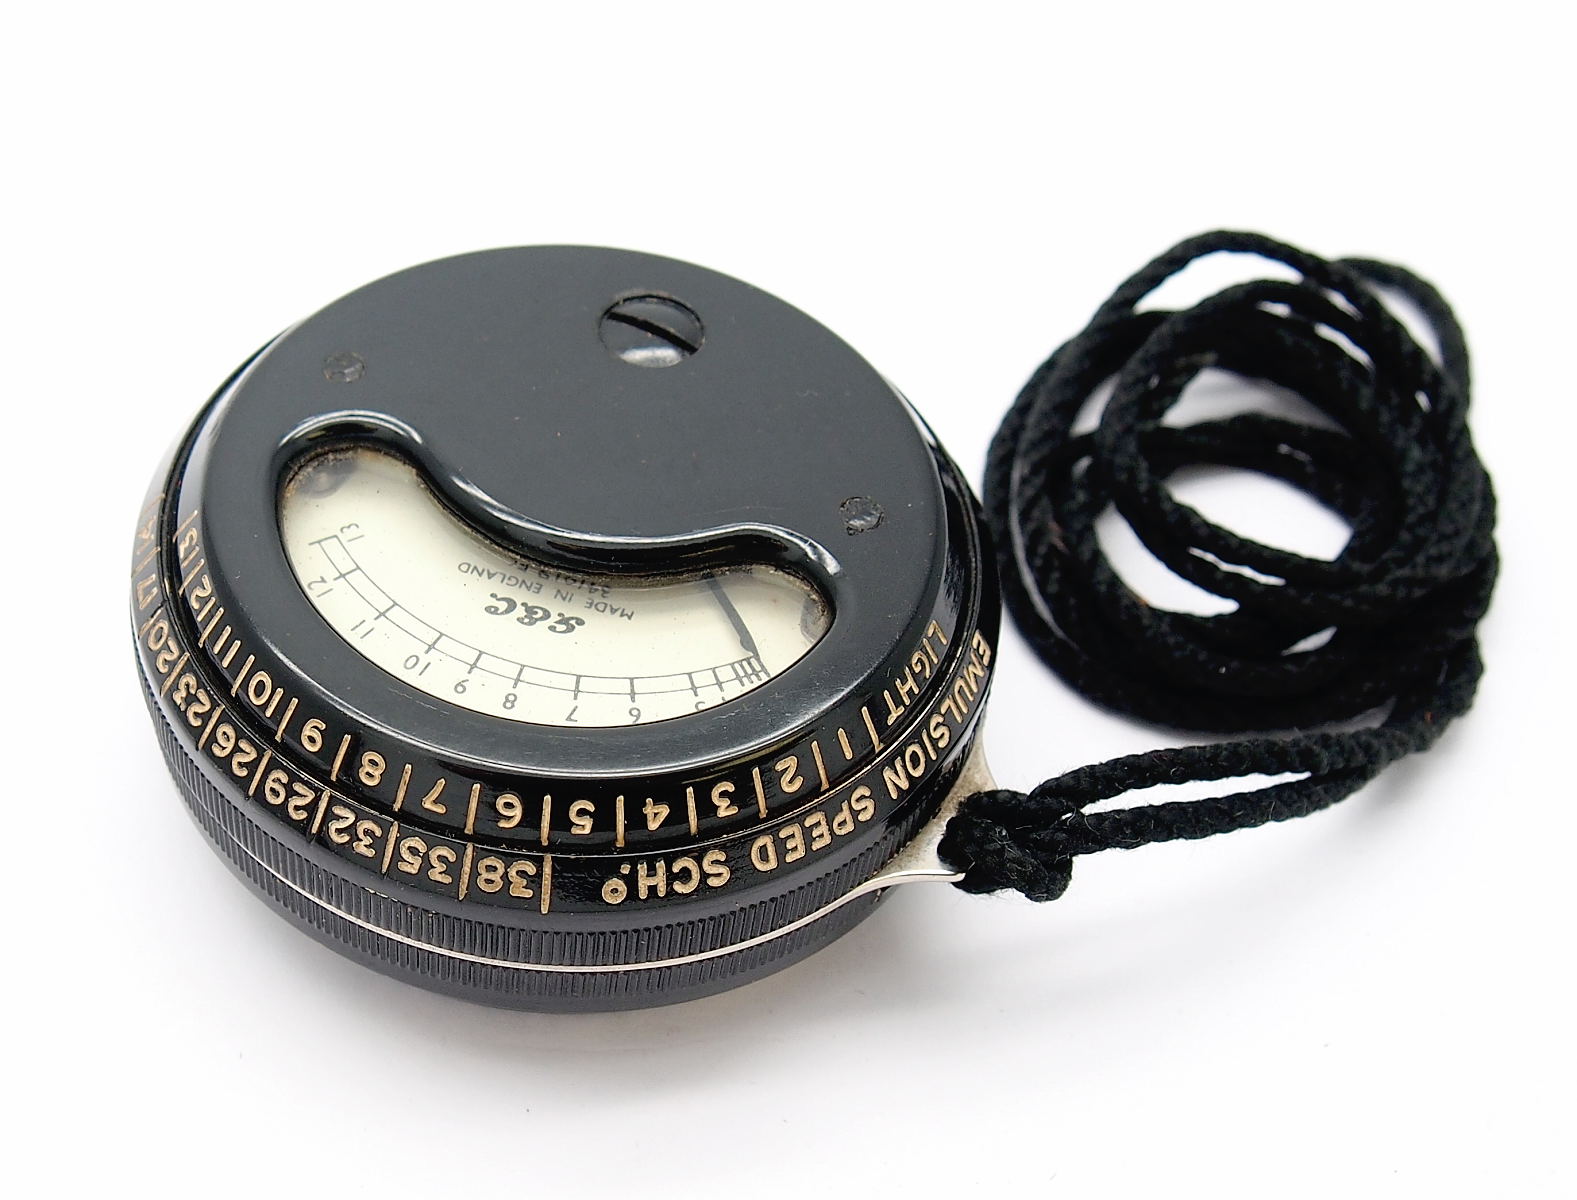 GEC Exposure Meter with Manual #9087